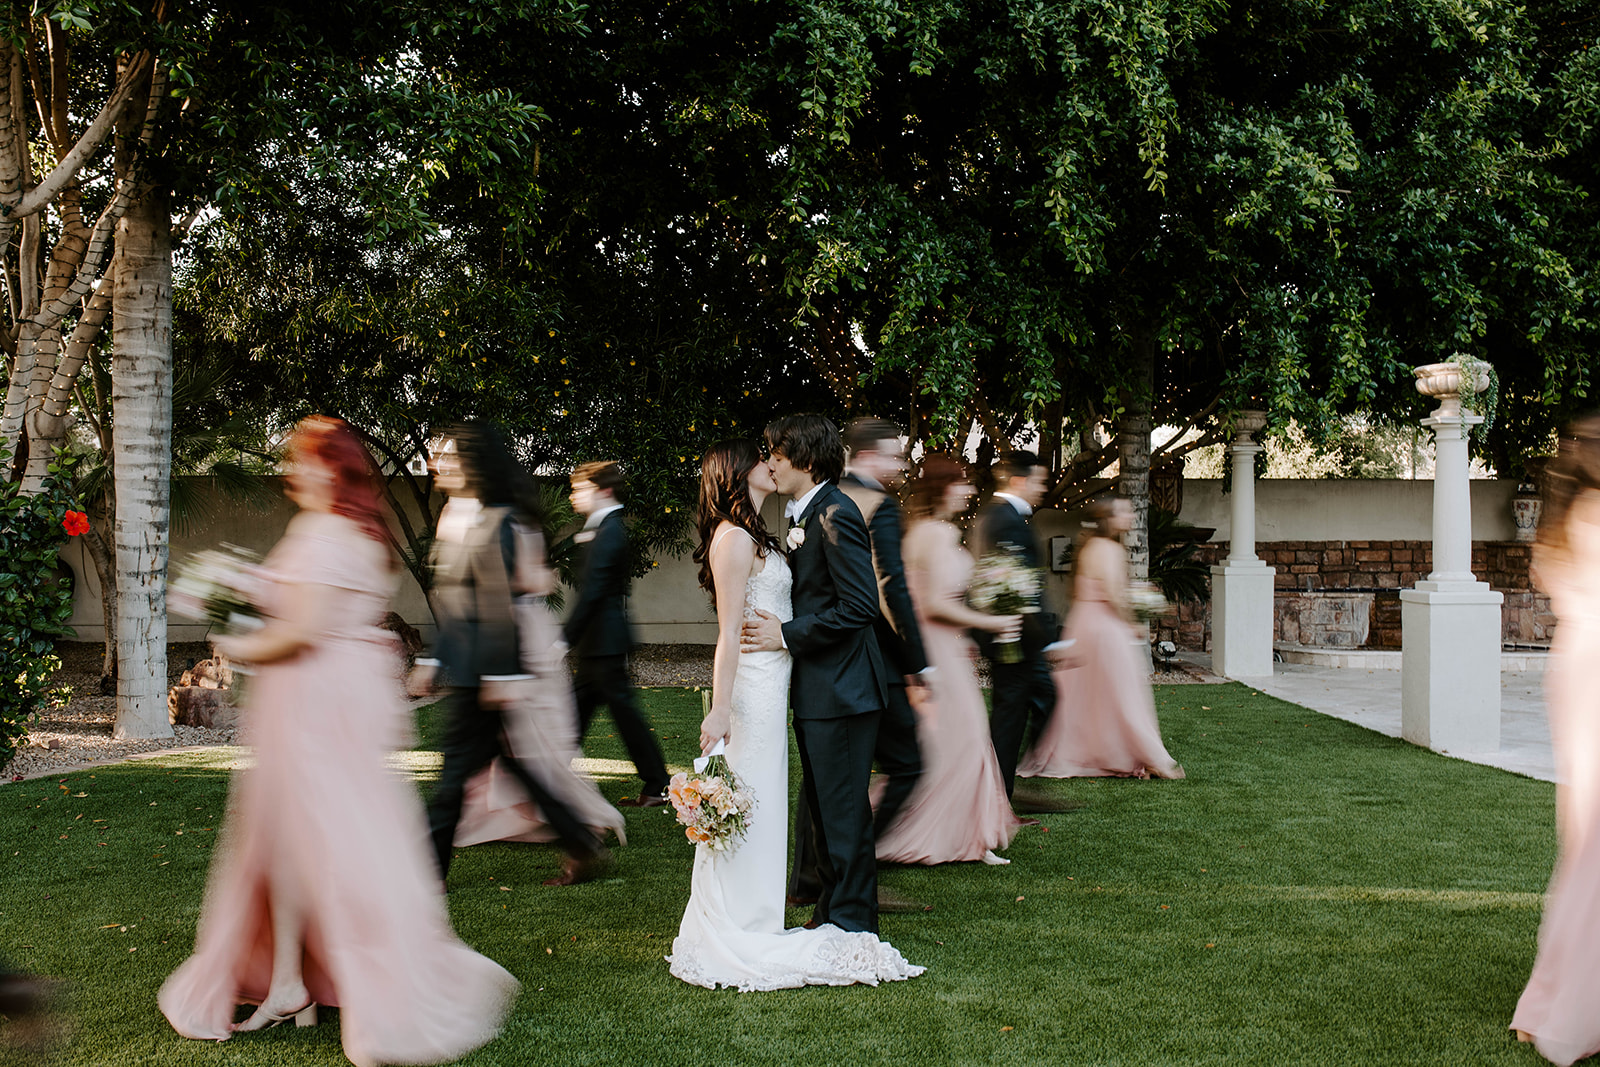 Motion blur wedding party photo